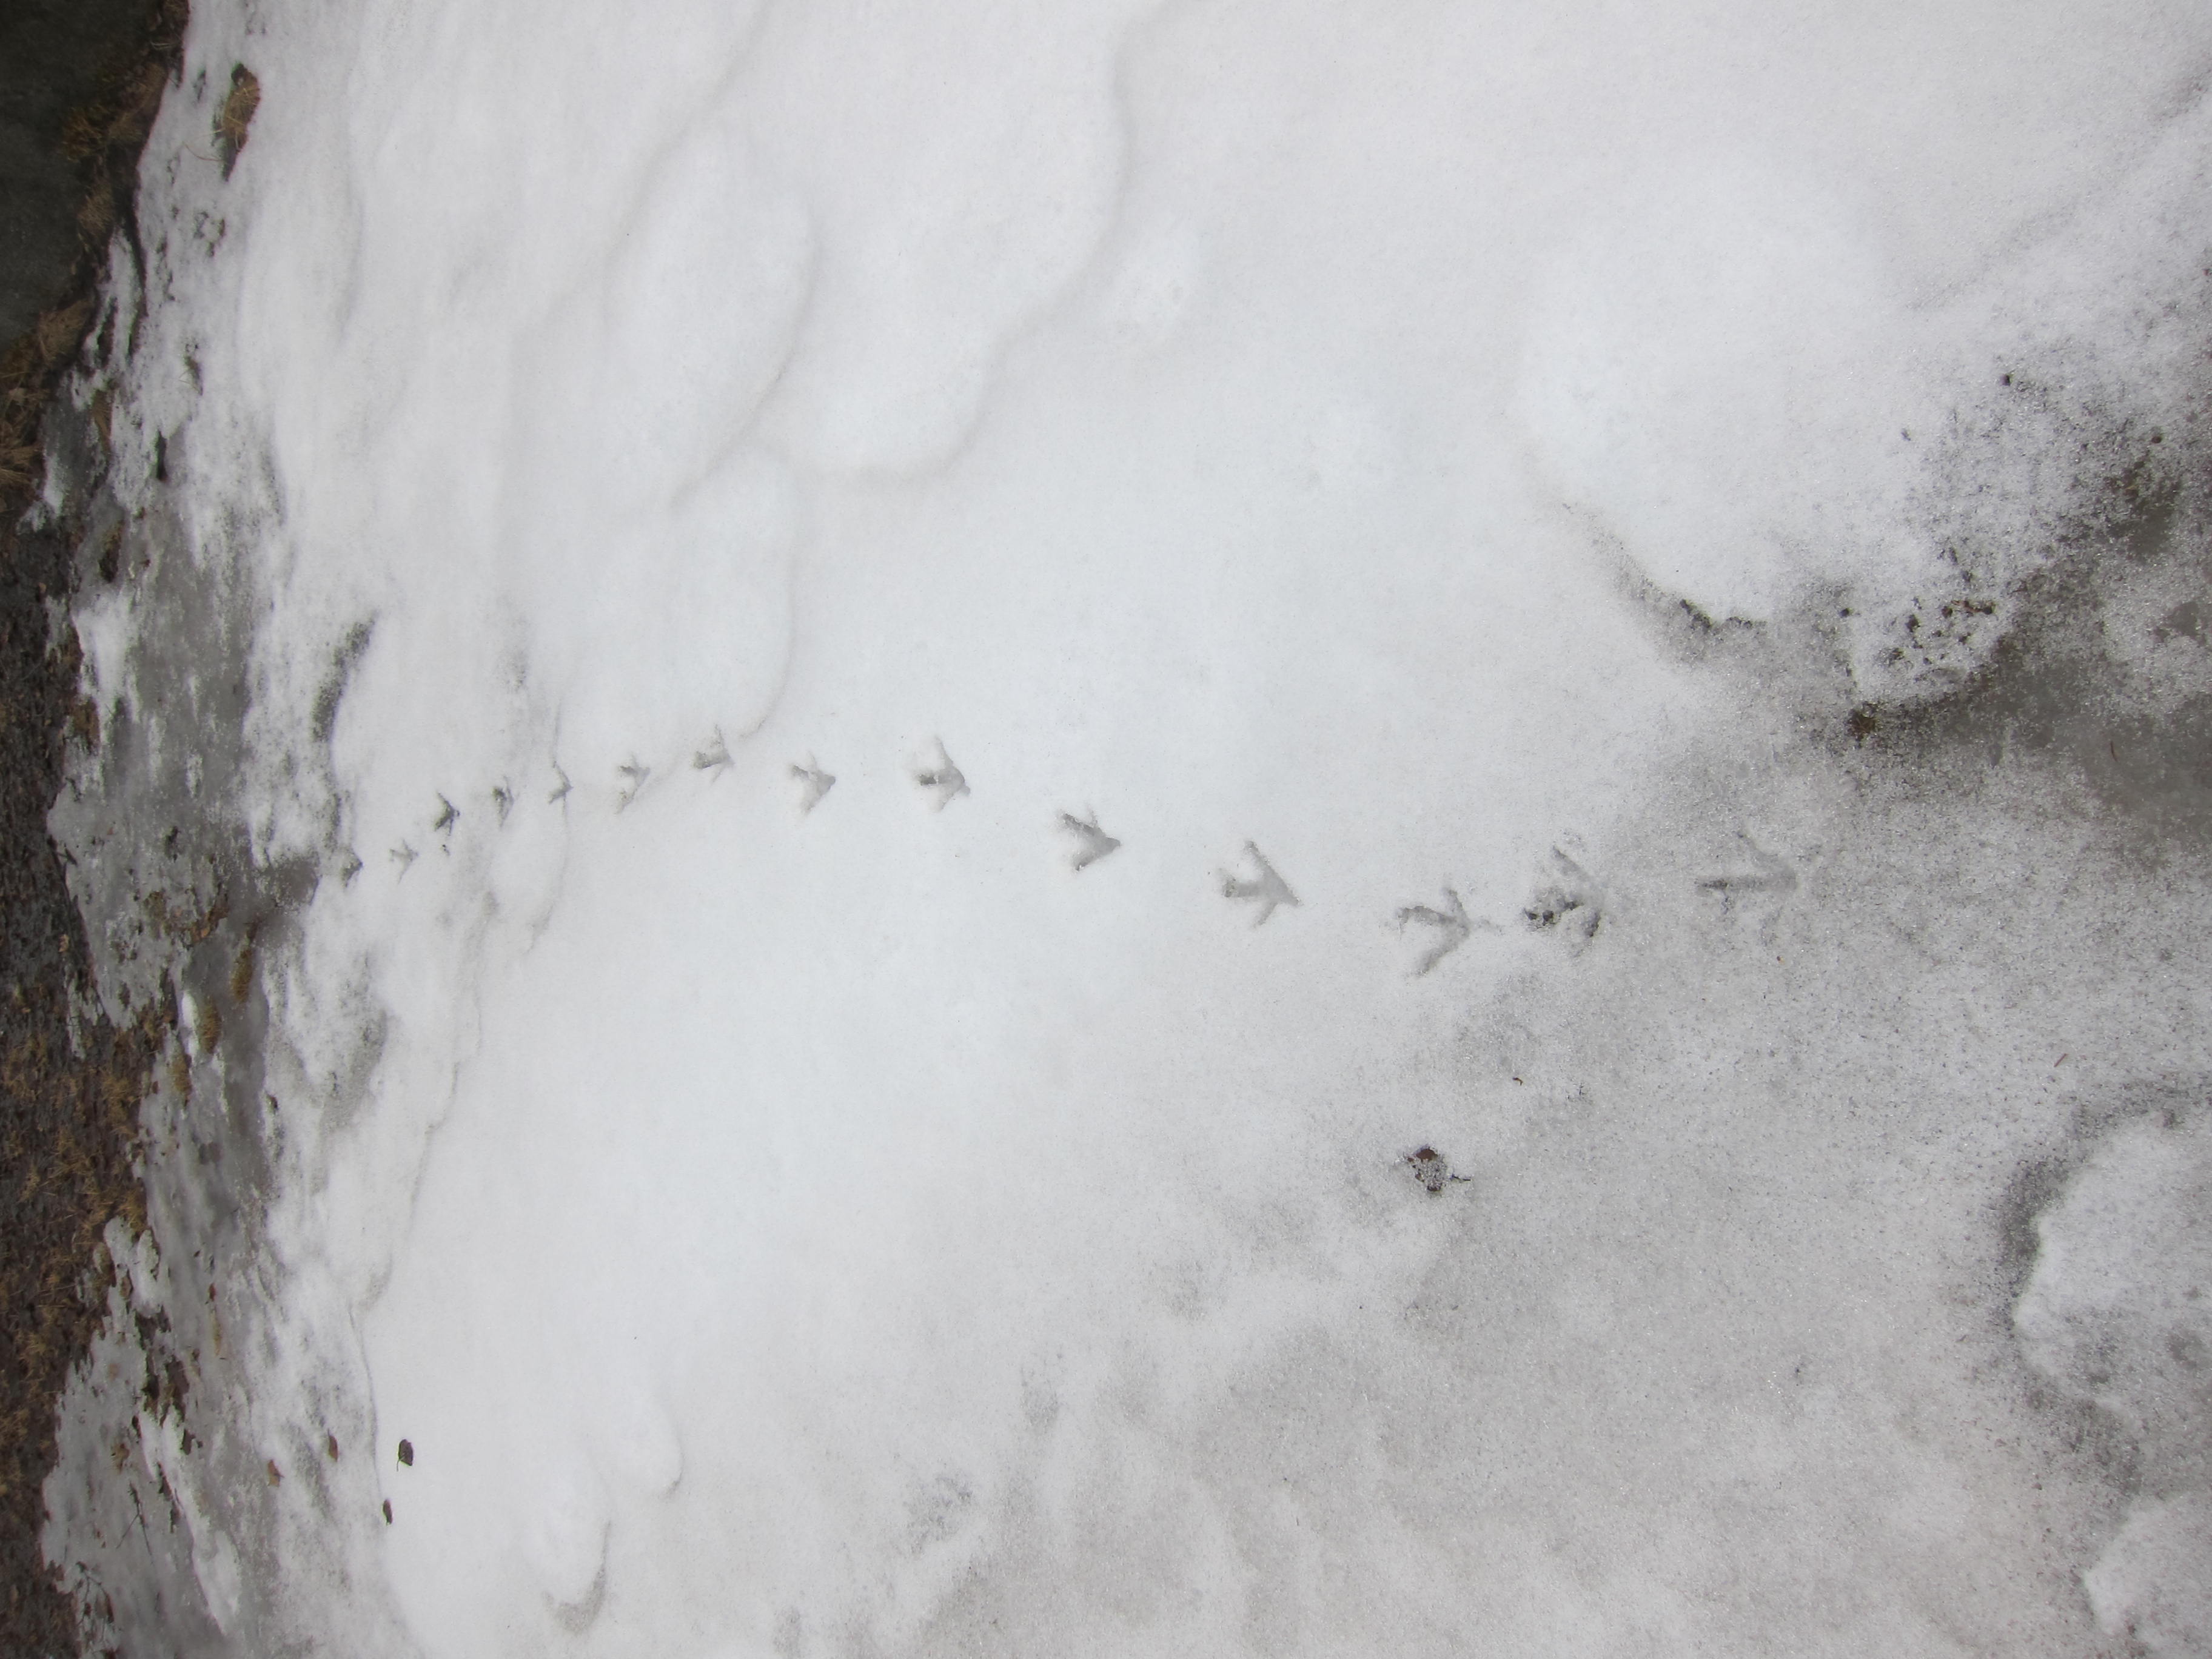 chicken tracks in fresh snow